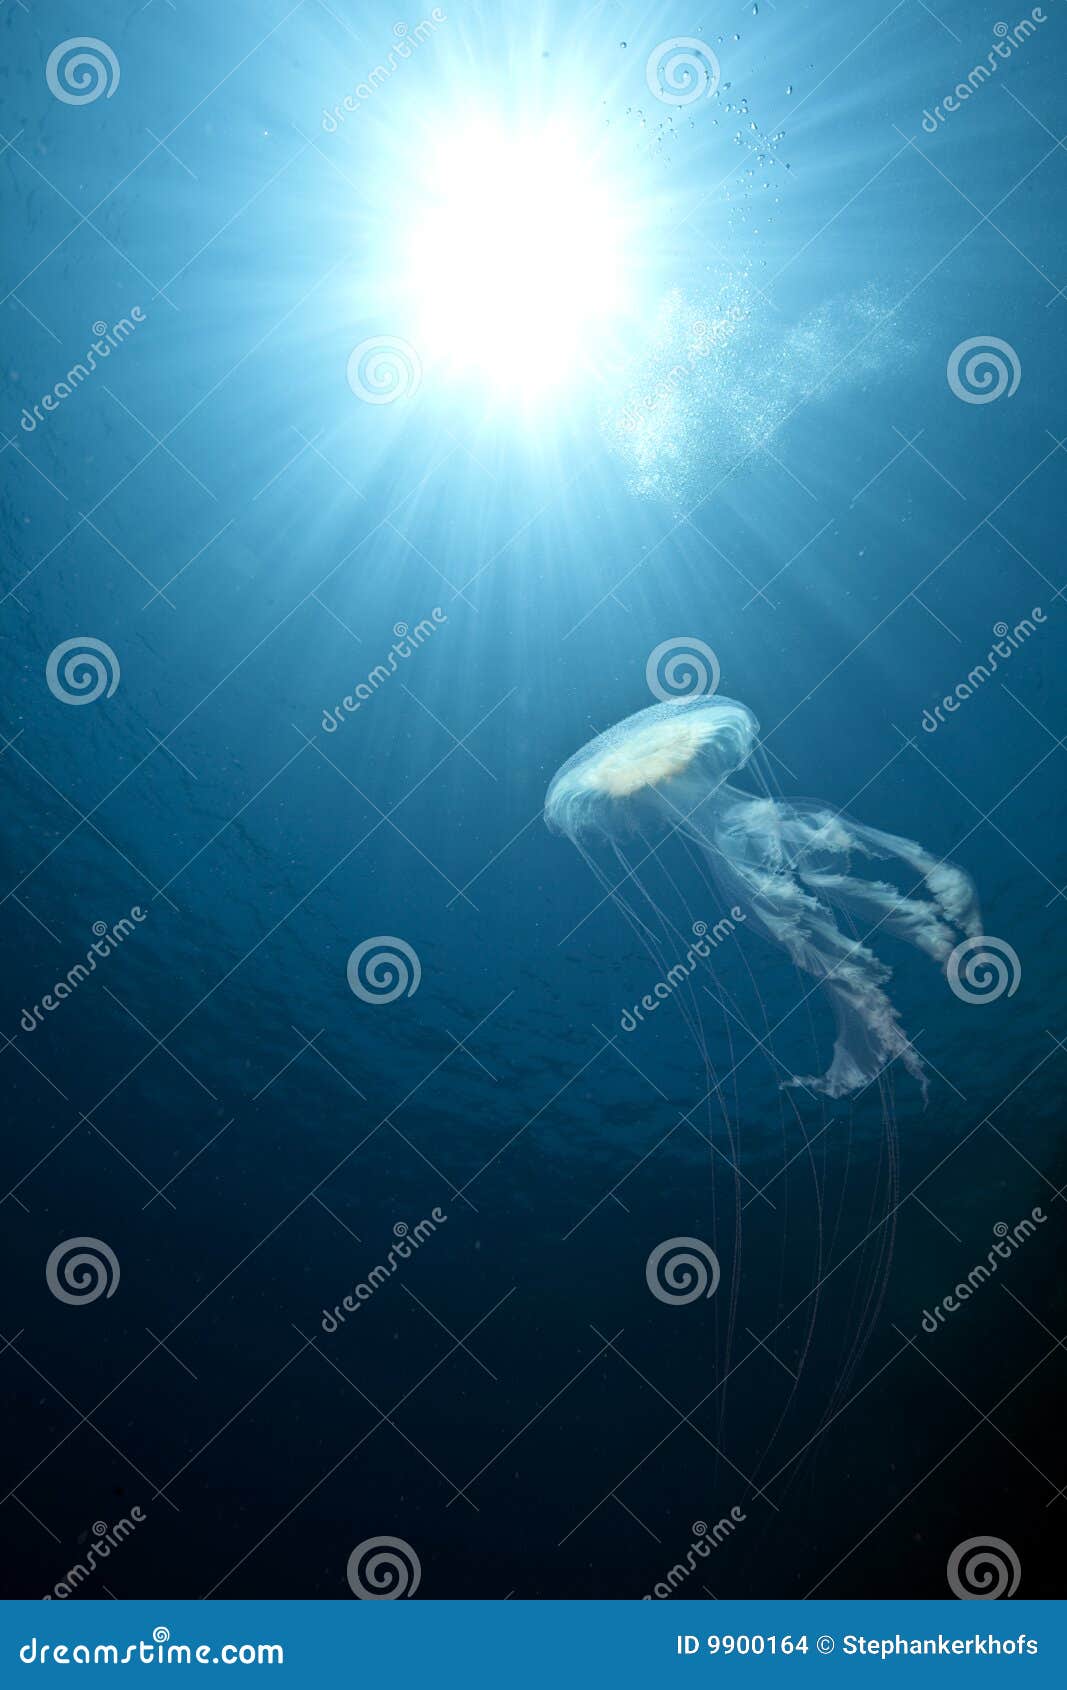 ocean, sun and luminescent jellyfish